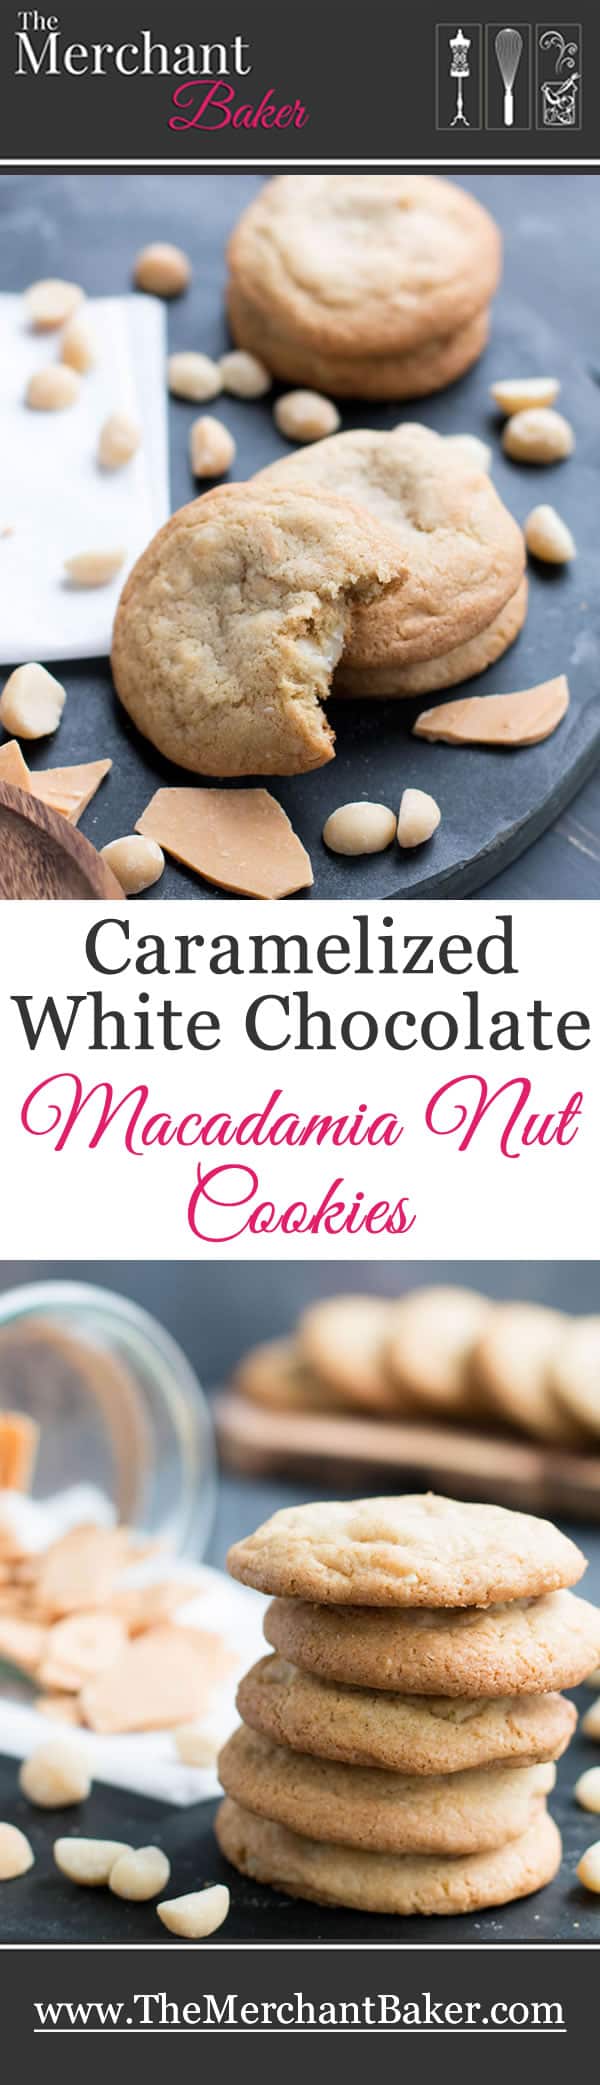 Caramelized White Chocolate Macadamia Nut Cookies